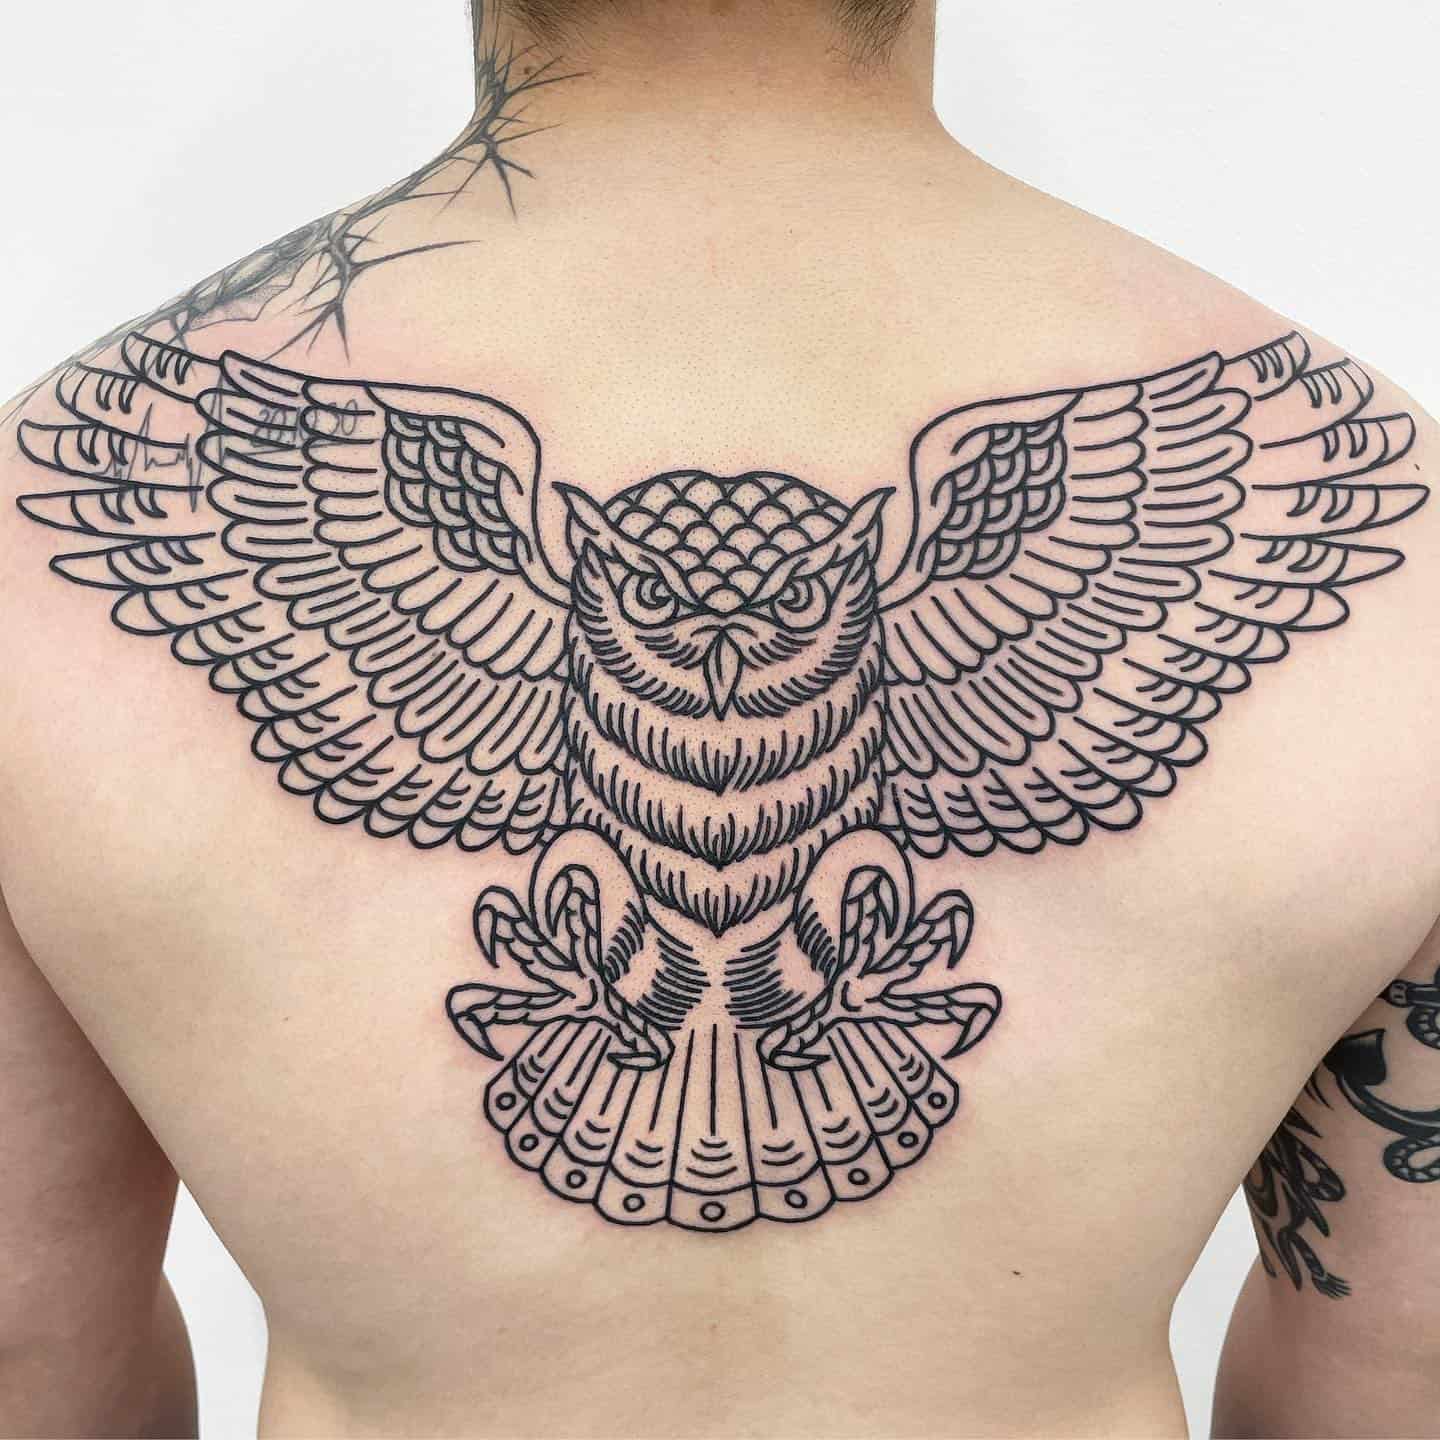 Flying Owl Realistic tattoo by Westfall Tattoo - Best Tattoo Ideas Gallery